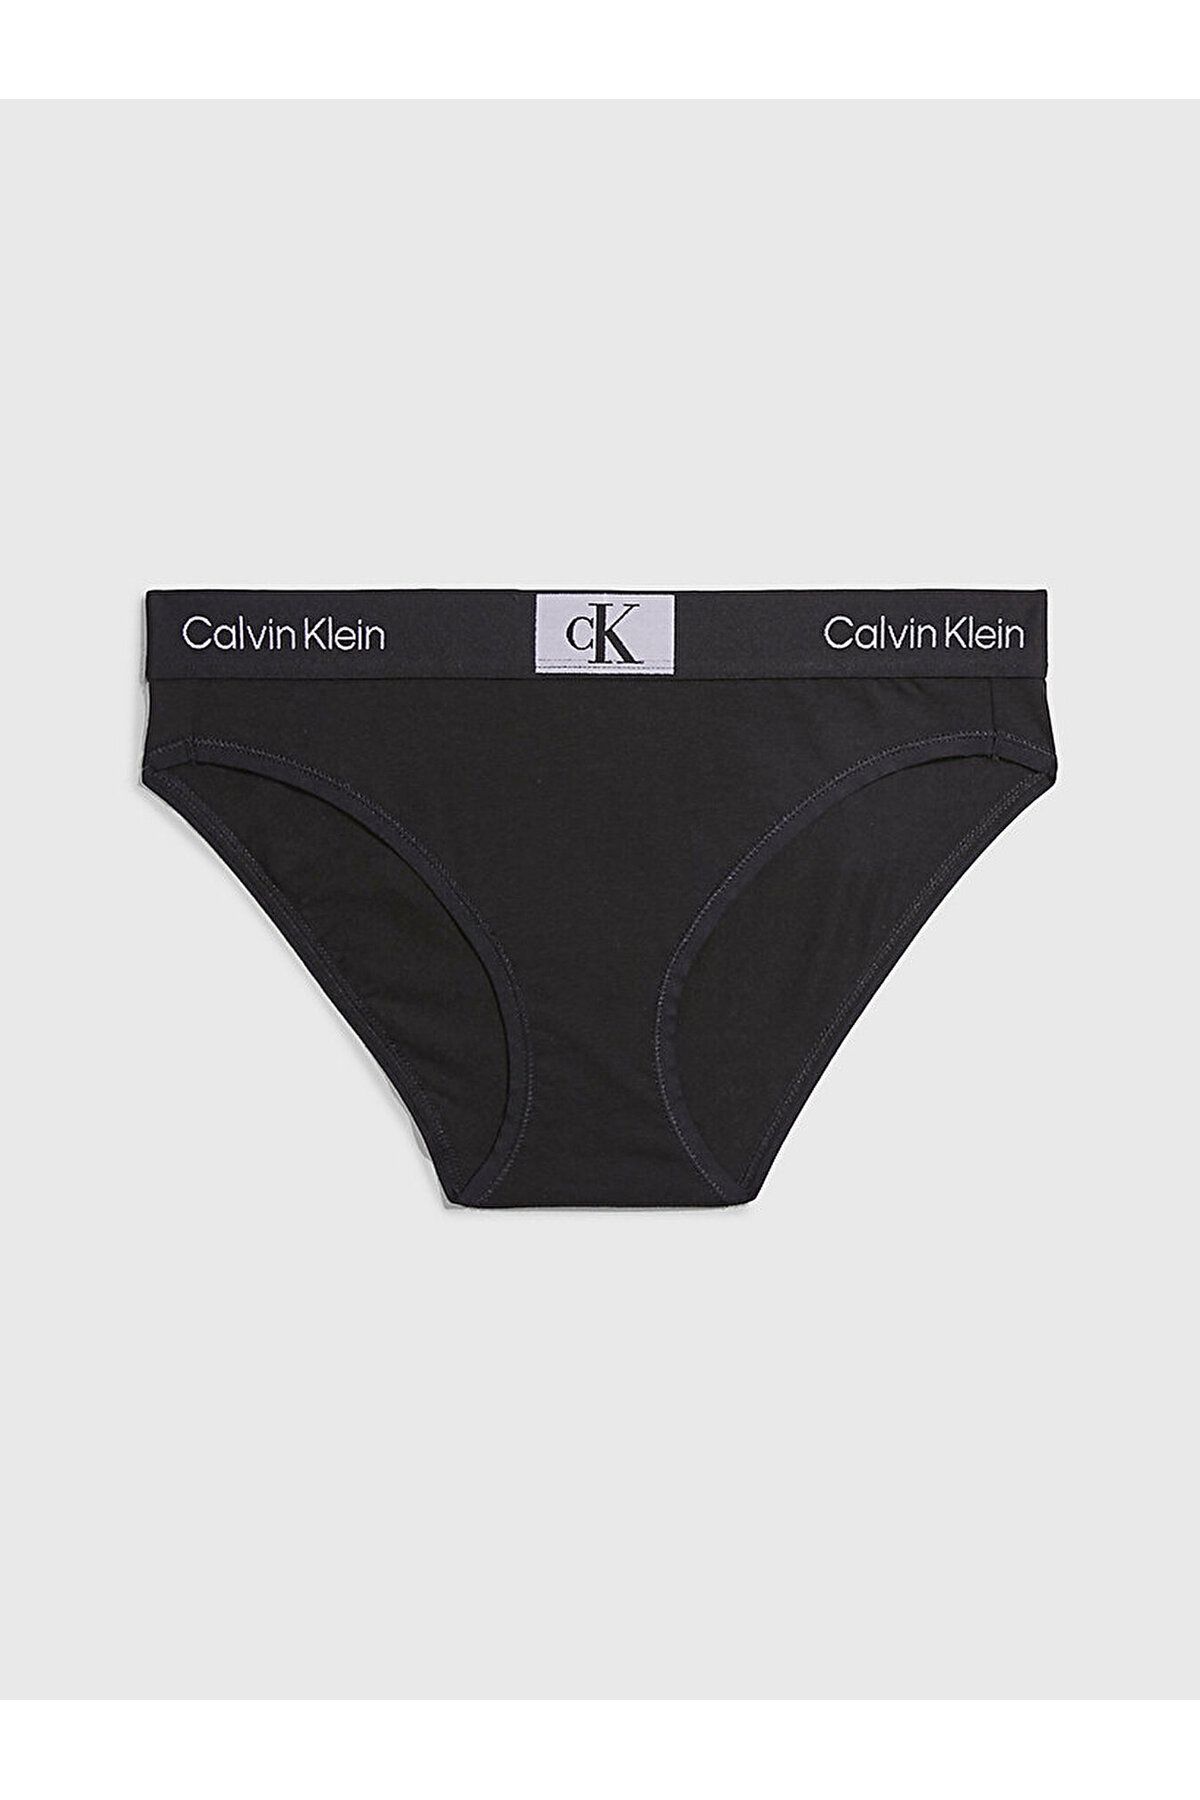 Calvin Klein Kadın Imzalı Elastik Bantlı Siyah Külot 000qf7222e-ub1